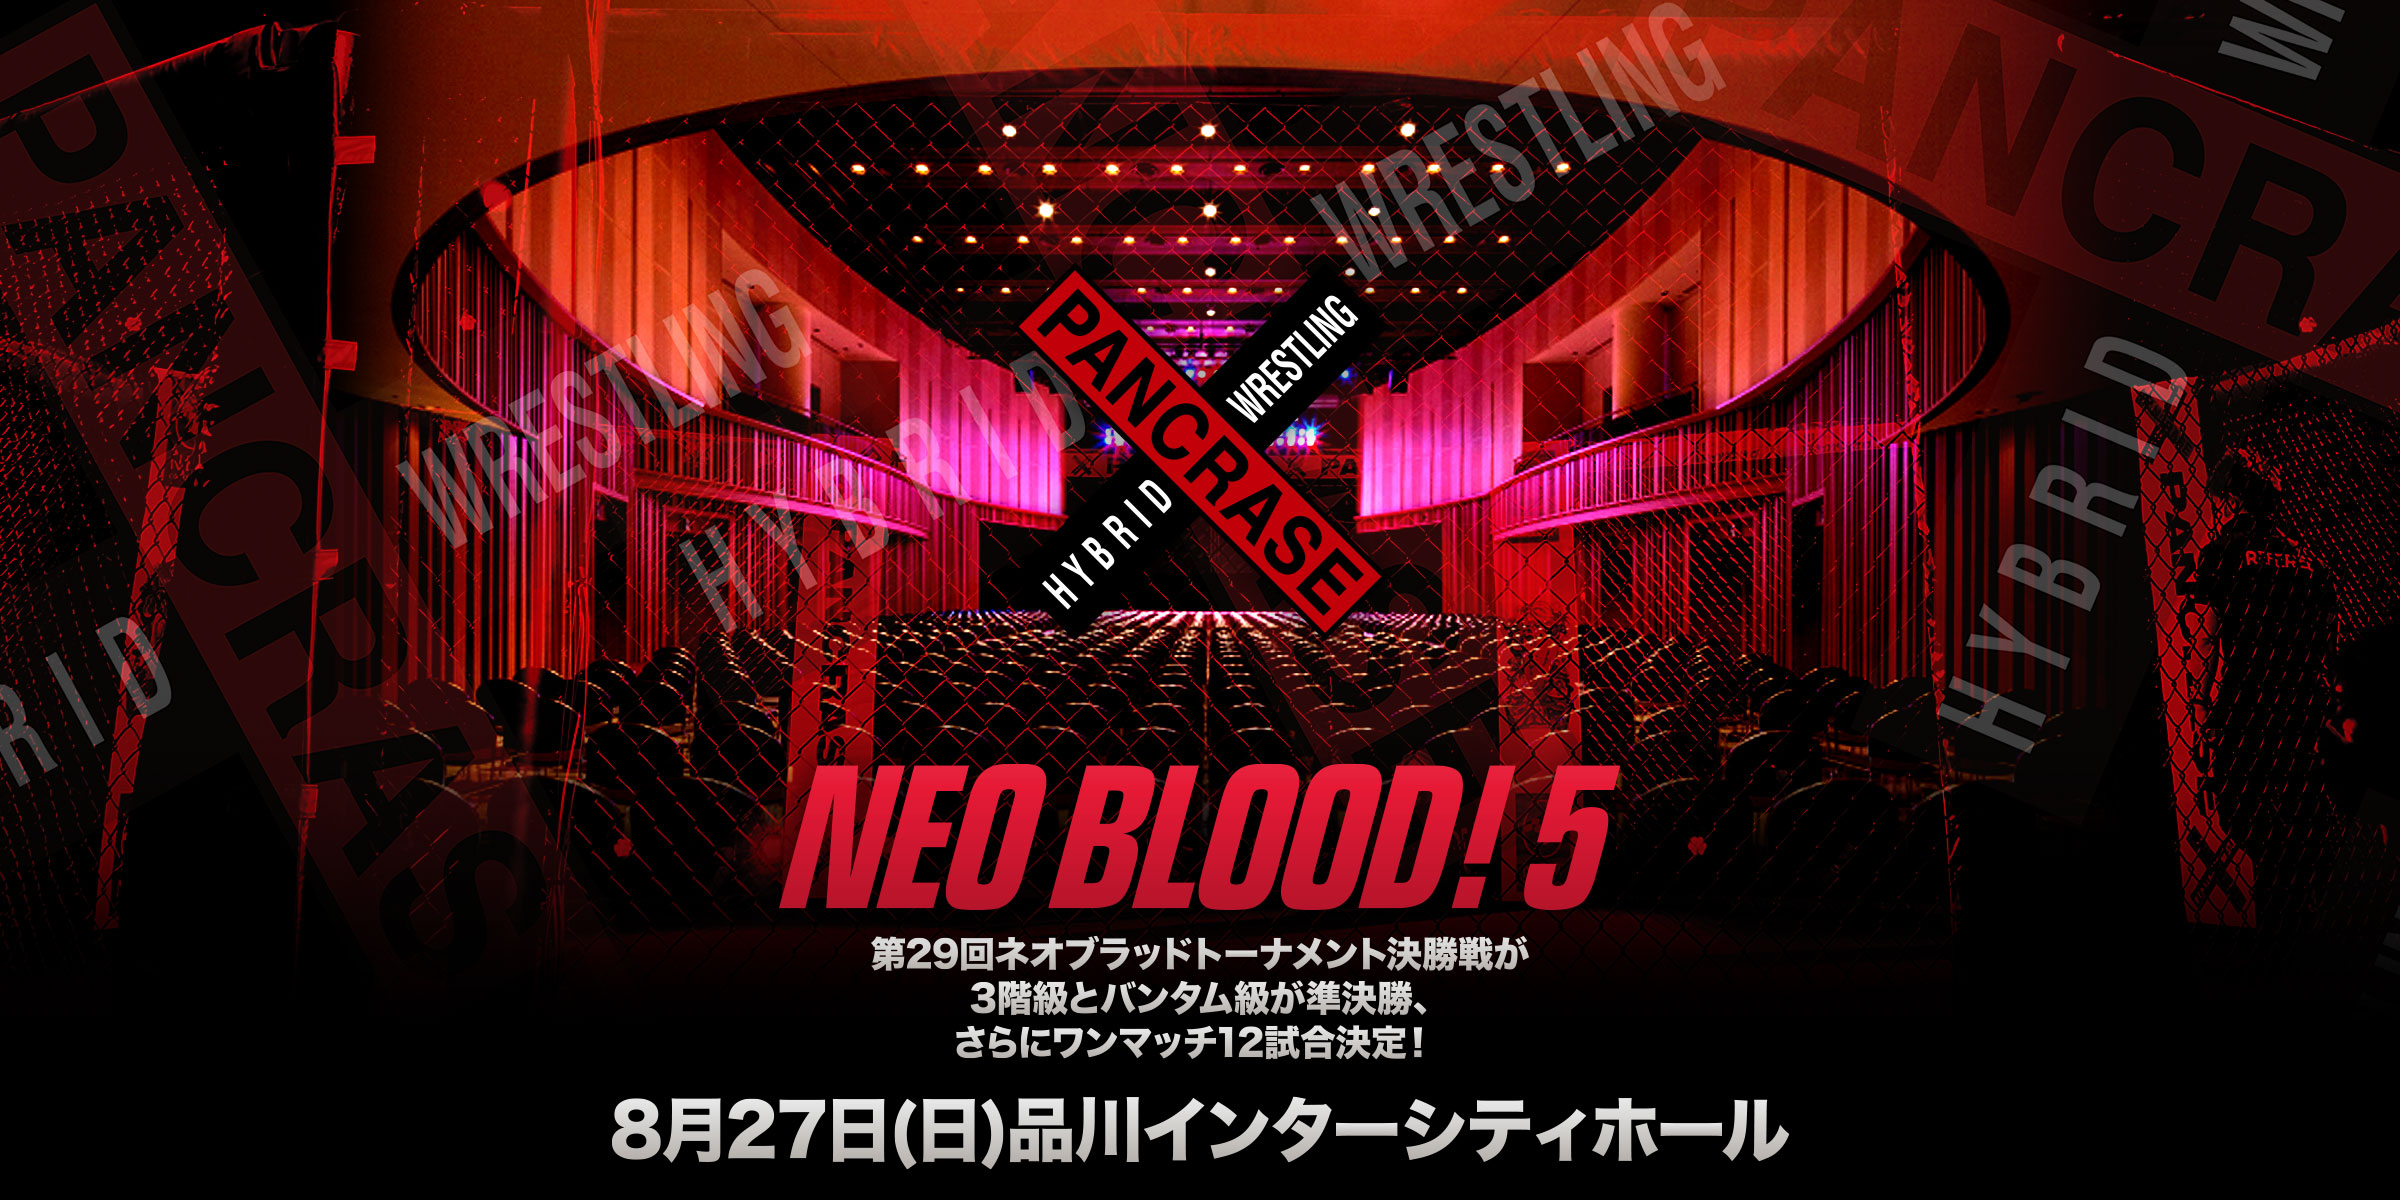 NEO BLOOD! 5